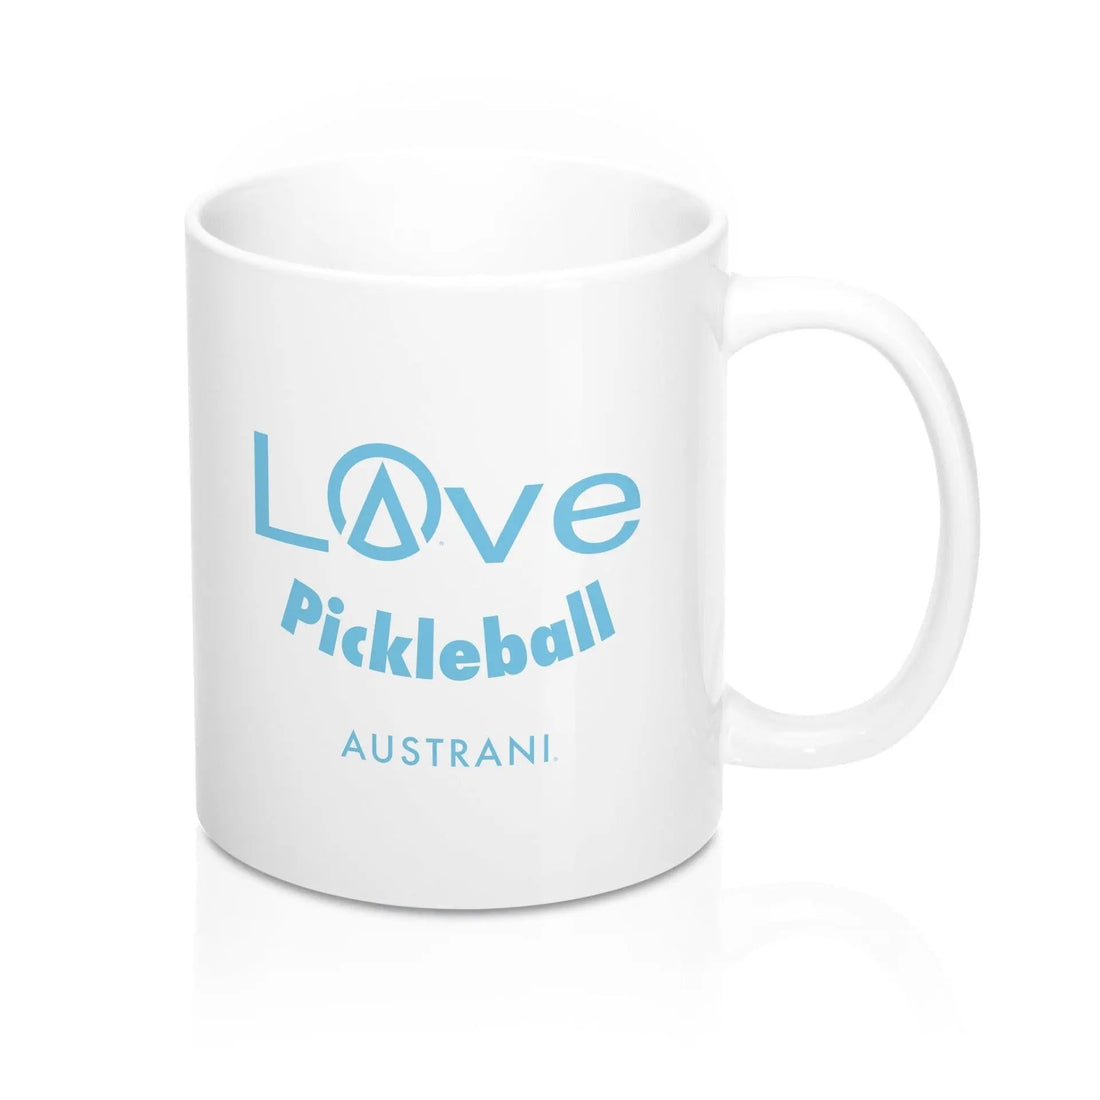 Austrani Love Pickleball Mug Racquet Point